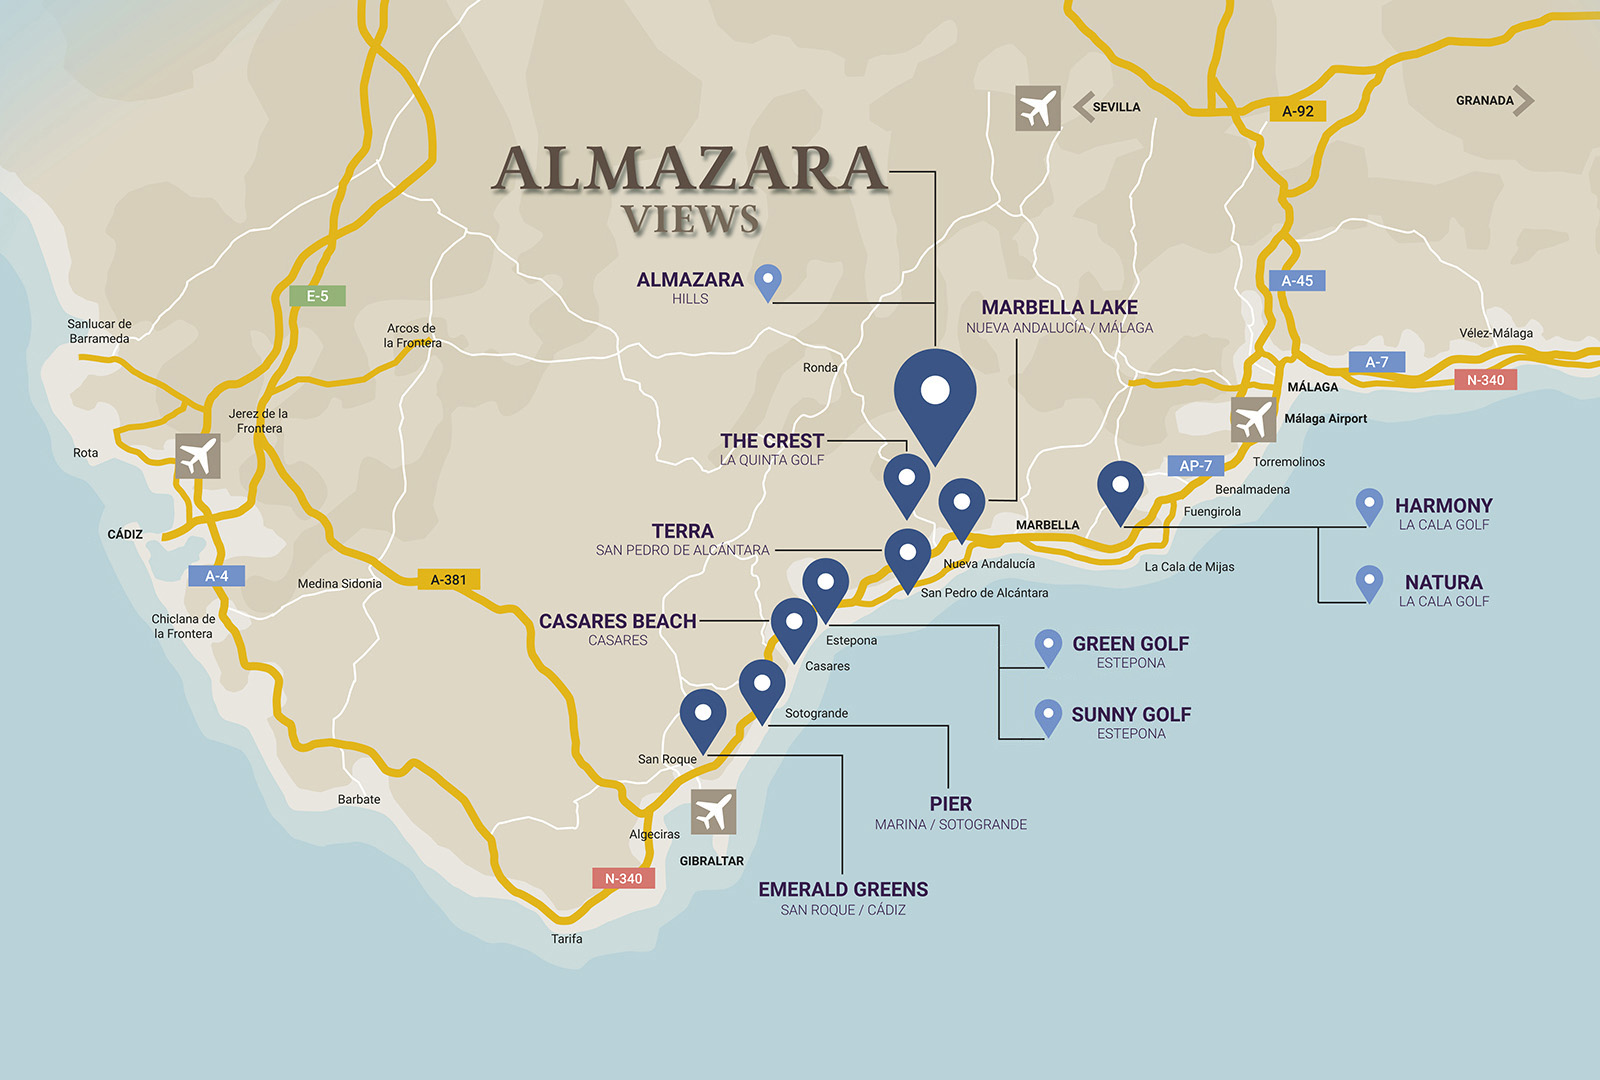 Mapa ALMAZARA VIEWS movil es